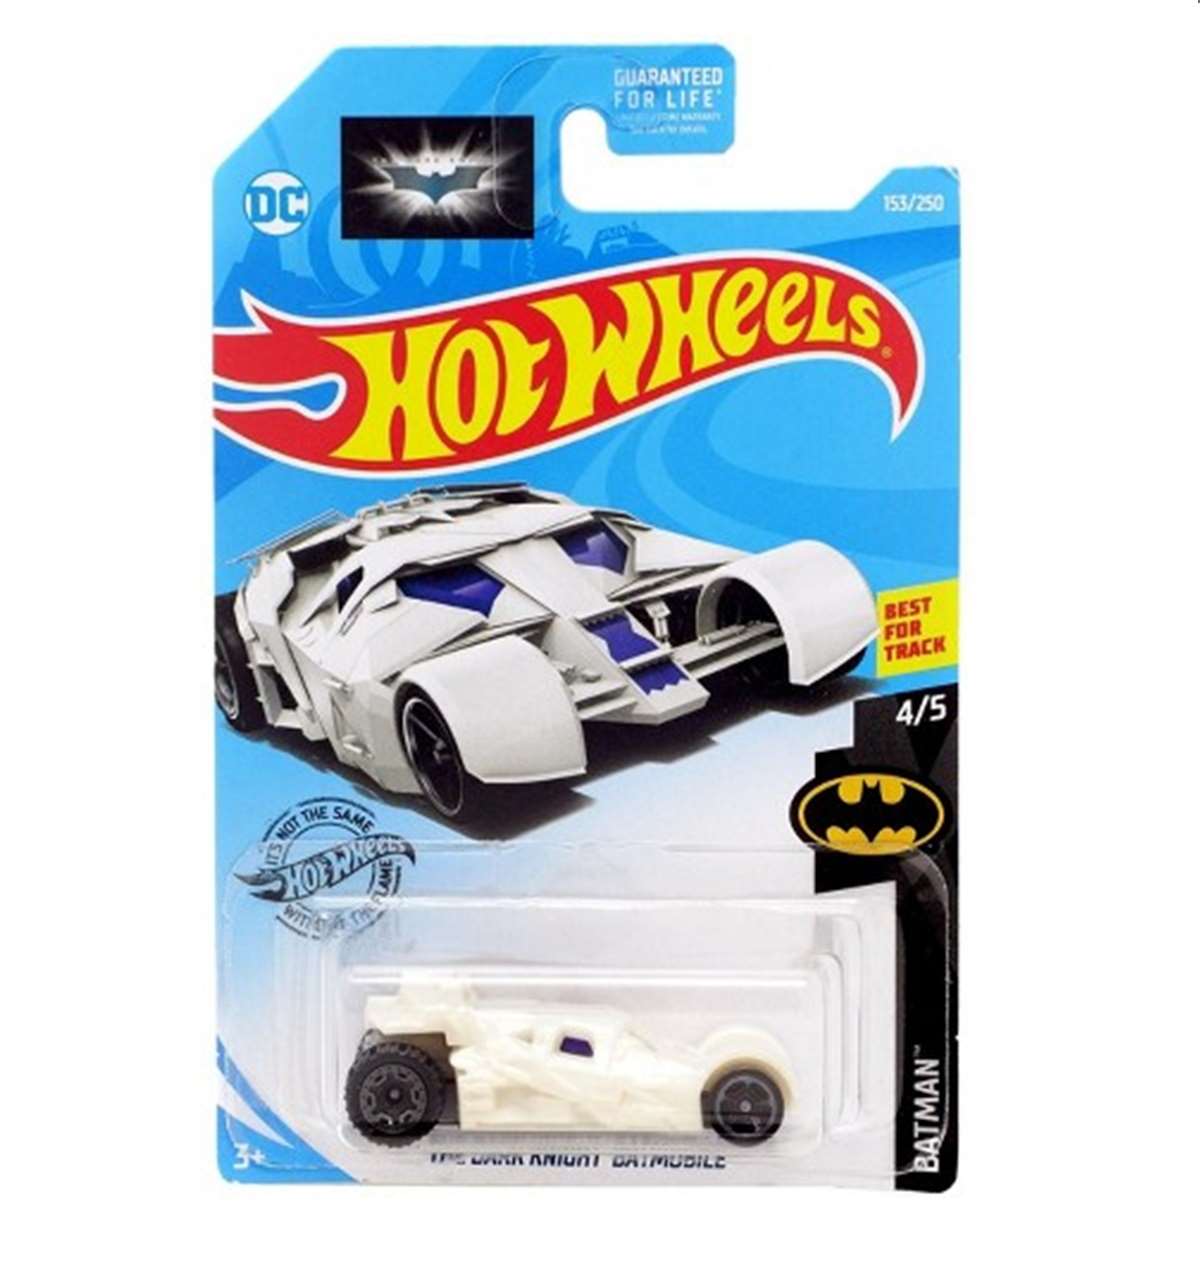 Batmobile The Dark Knight Rises Hotwheels Best For Track 4/5